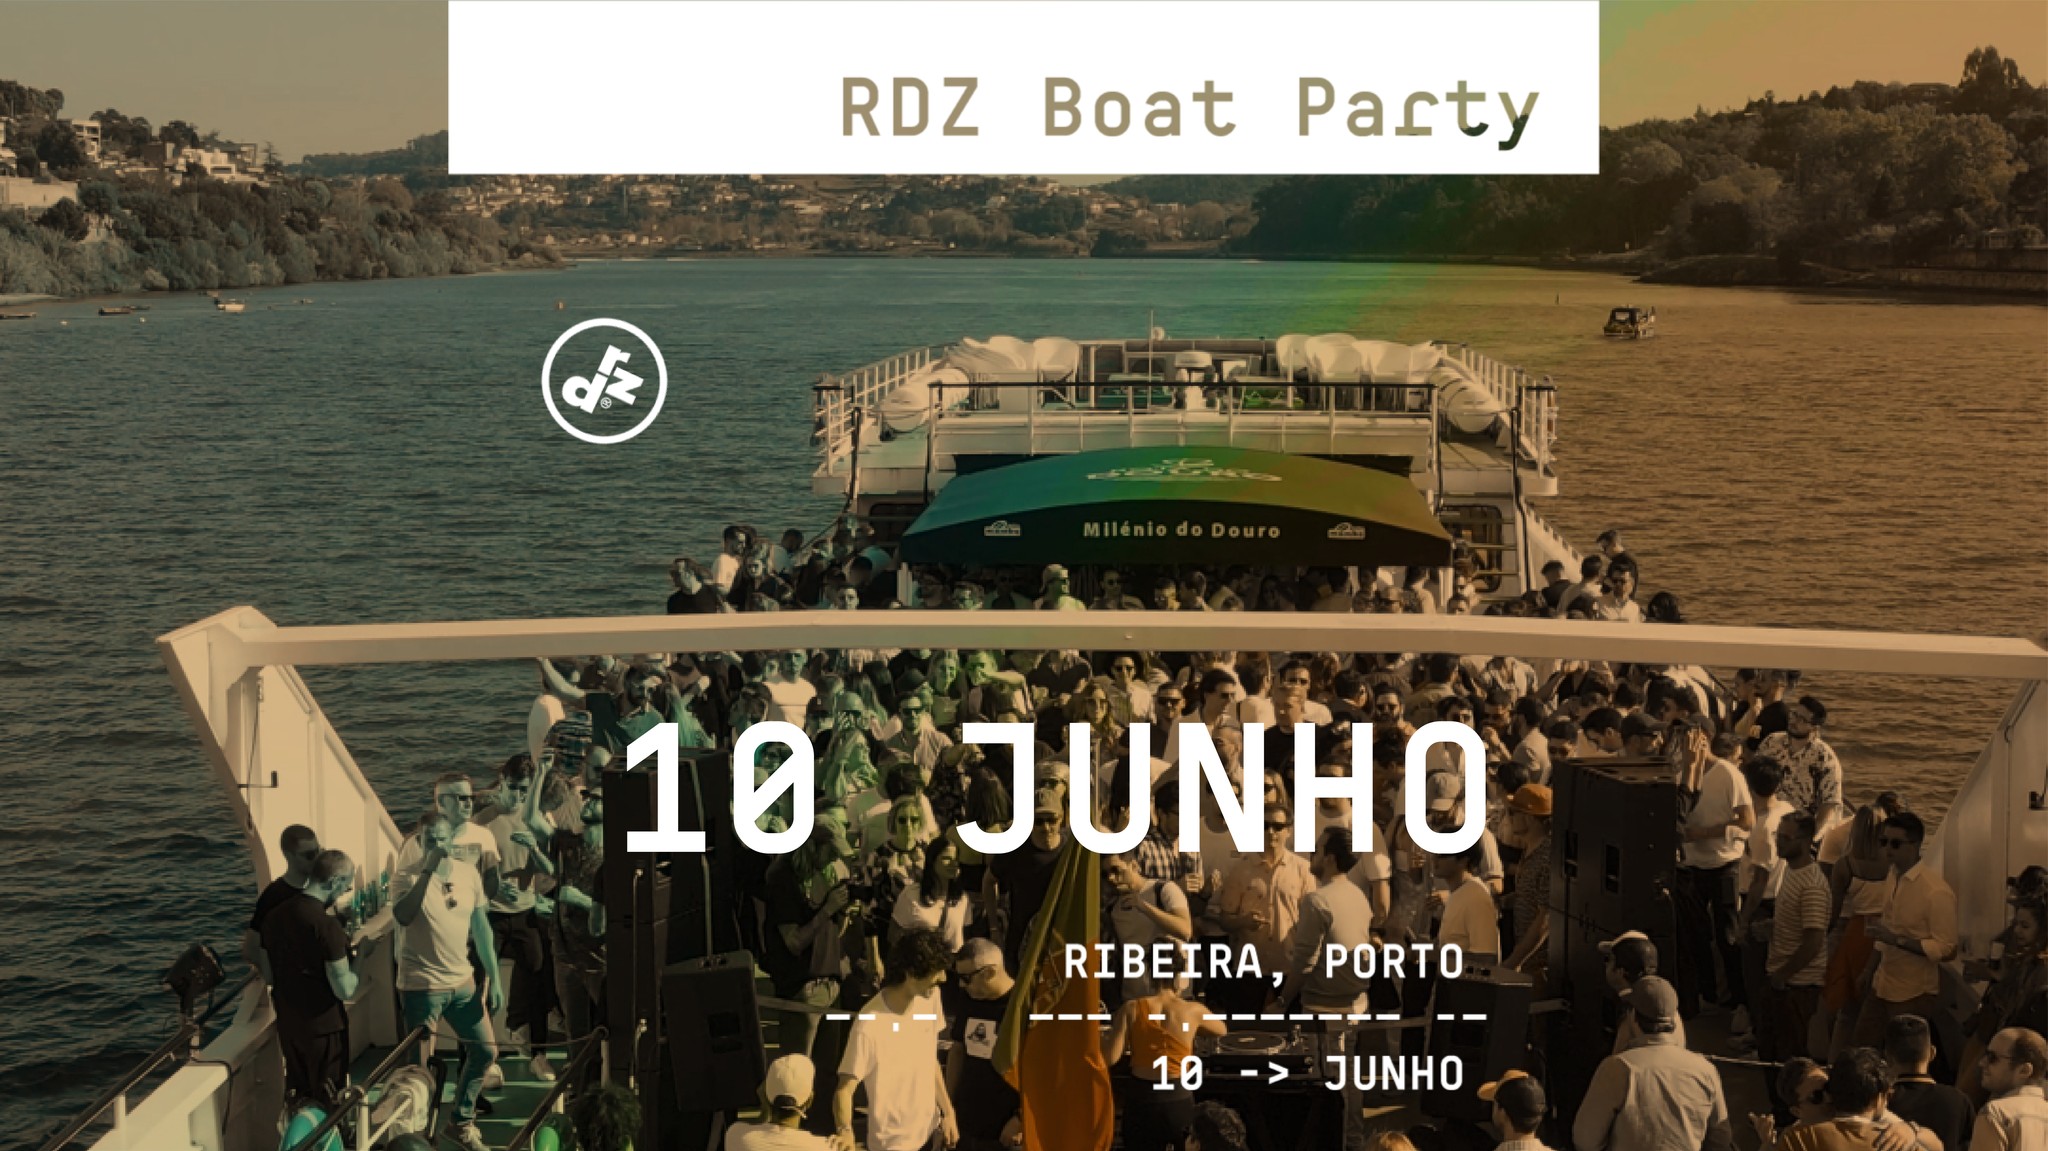 RDZ BOAT PARTY - Ribeira do Porto